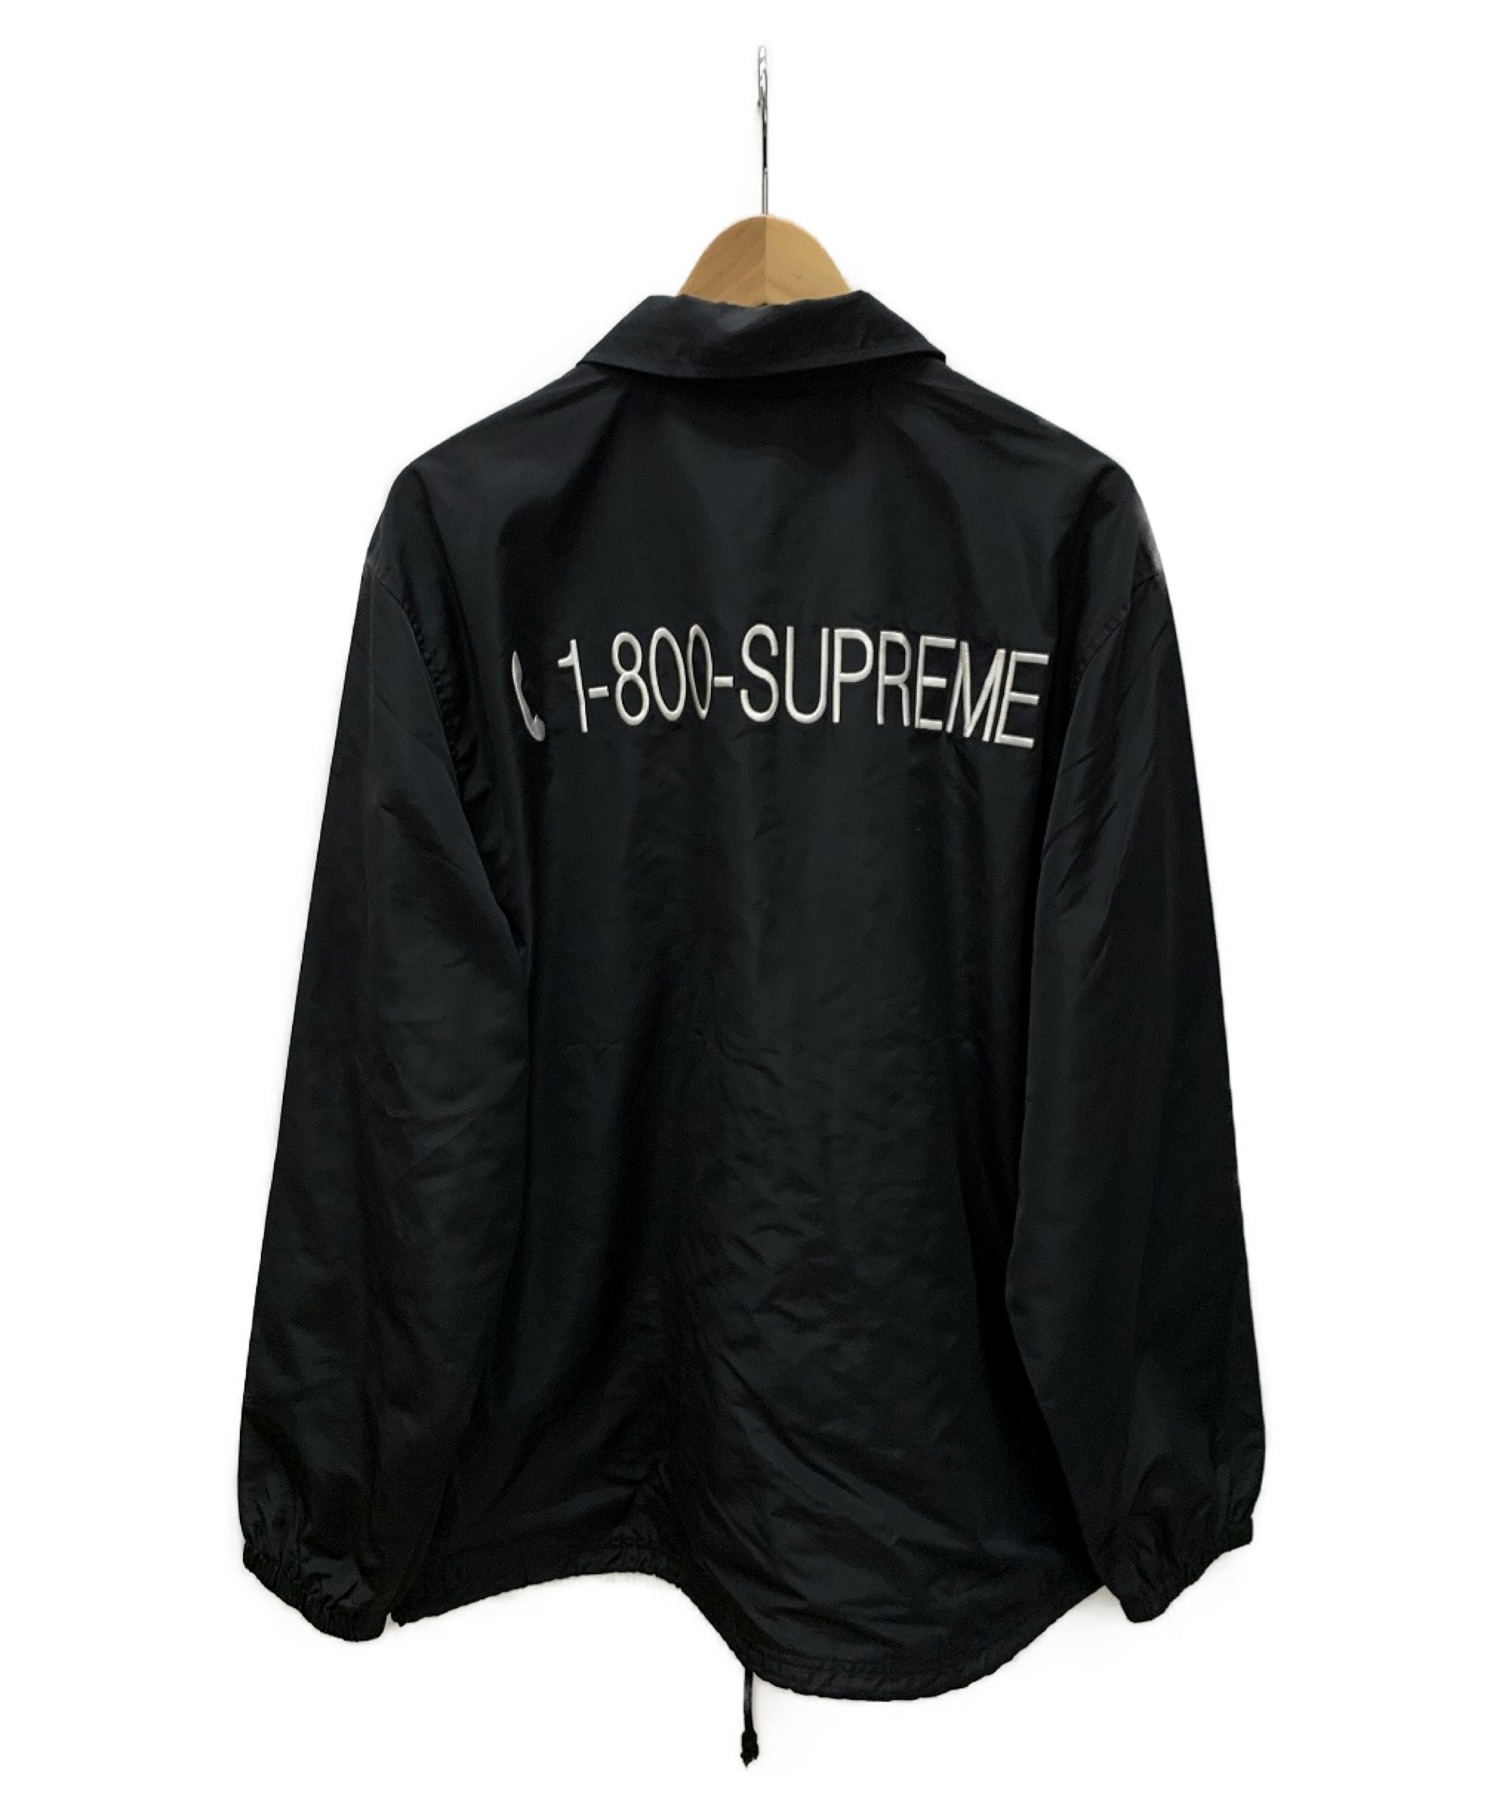 Supreme/UNDERCOVER Coaches Jacket XL